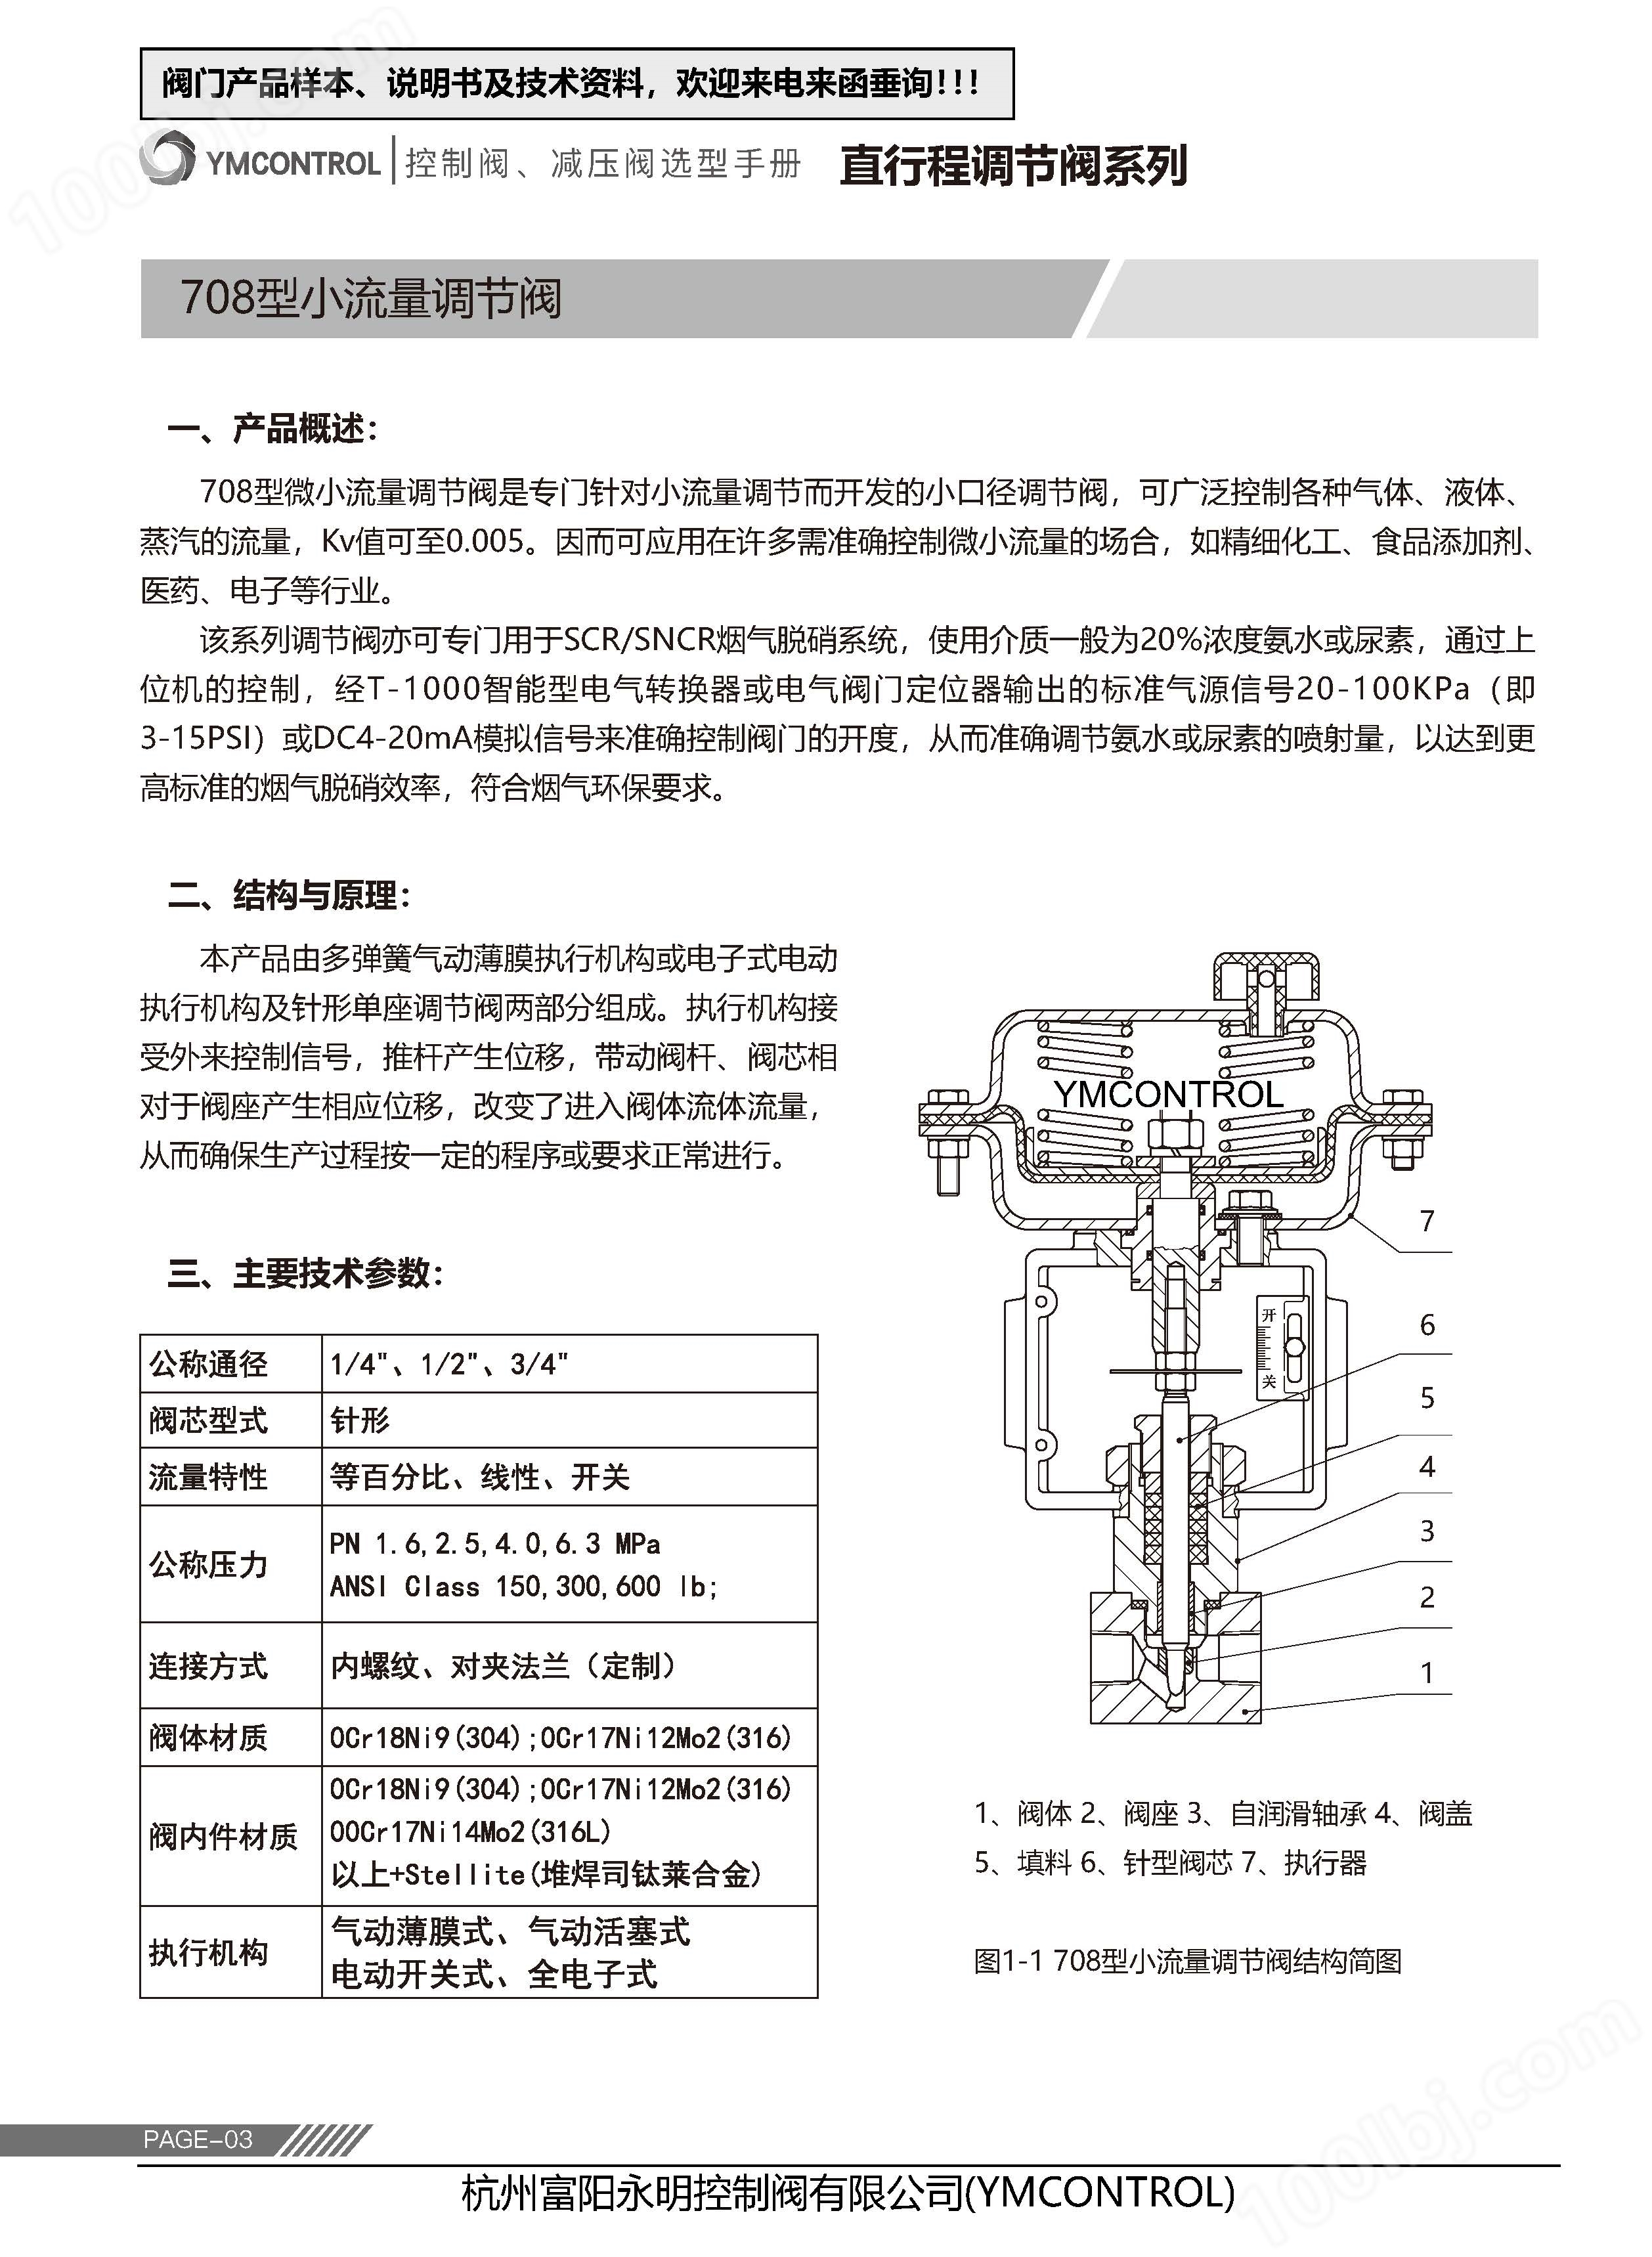 708ME-ZXPE气动薄膜微小流量调节阀产品样本说明书